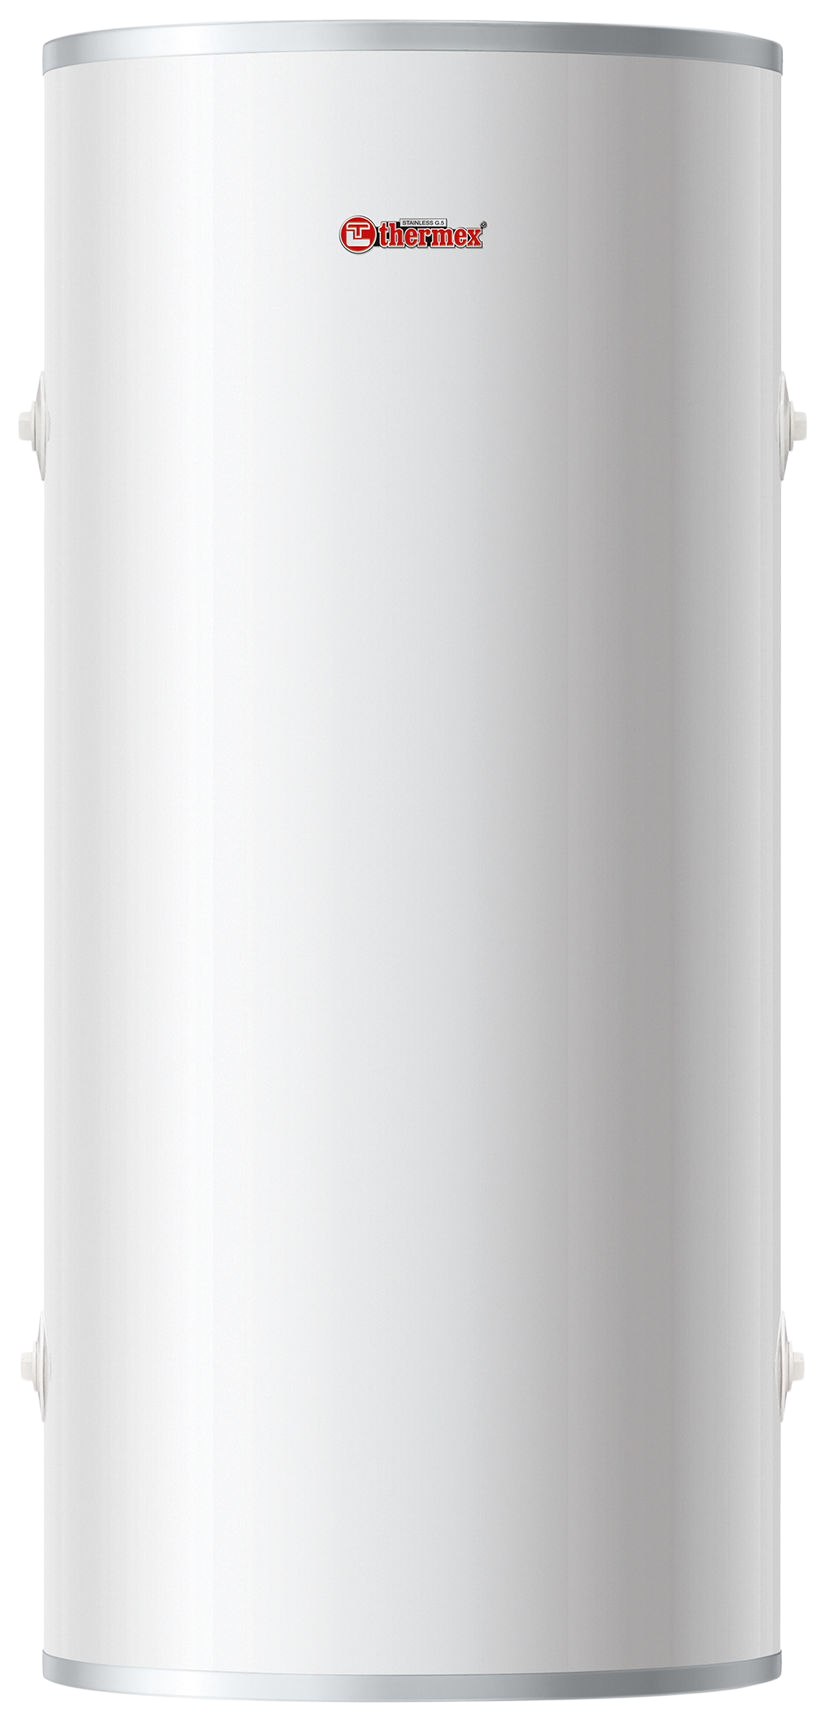 Водонагреватель накопительный THERMEX IR 200 V white водонагреватель накопительный thermex irp 200 f white grey